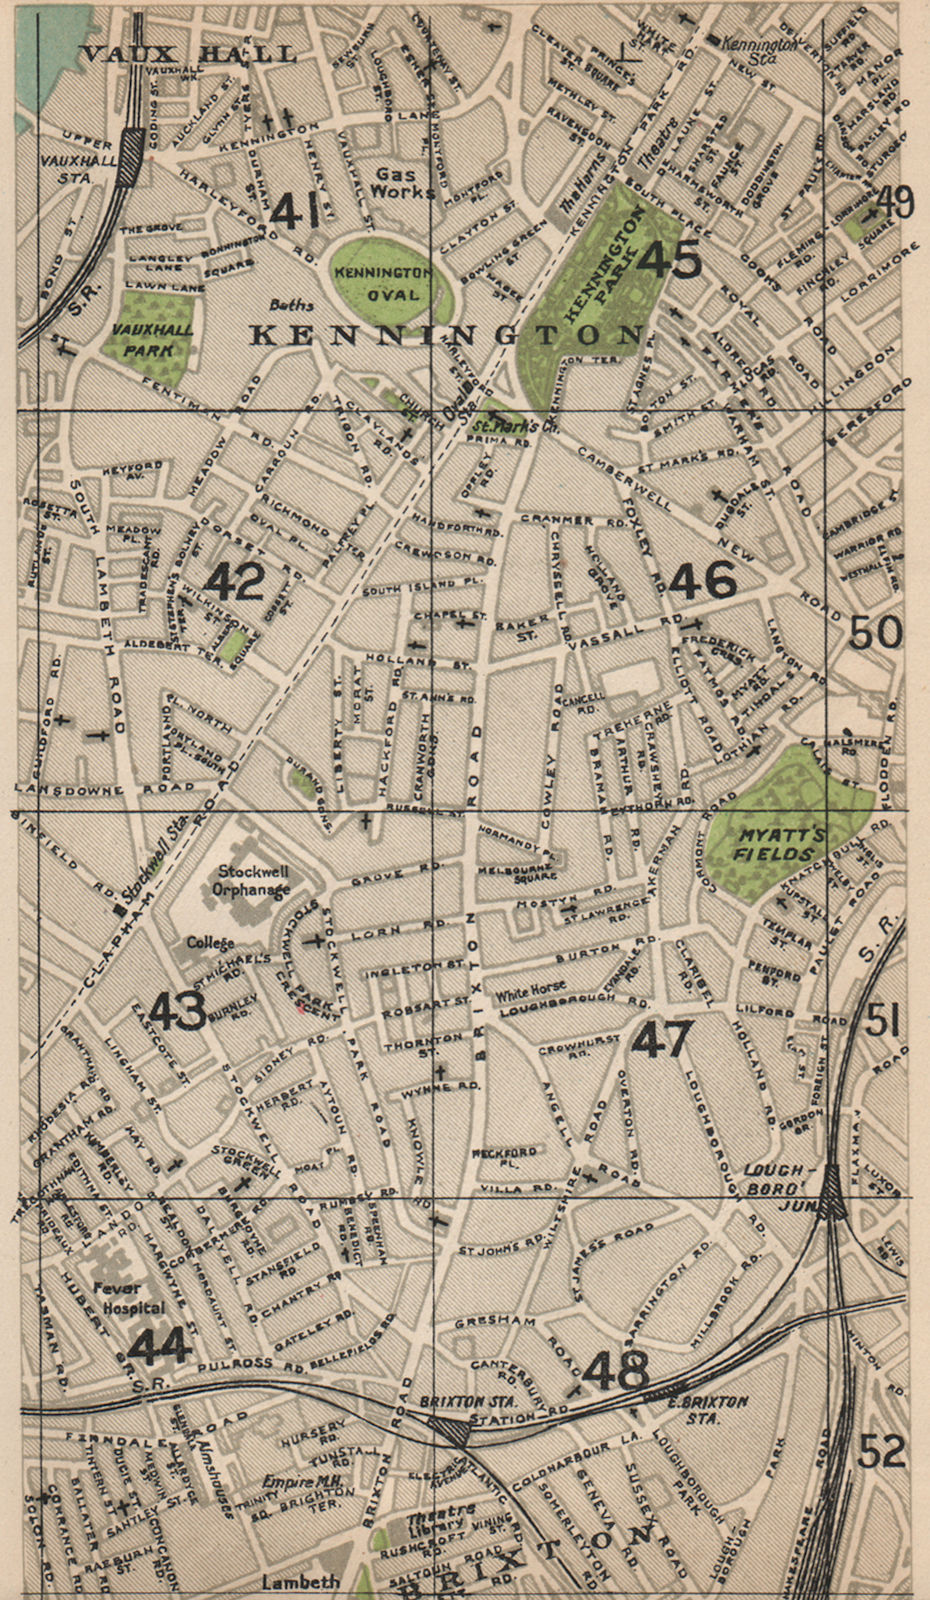 LONDON S. Kennington Oval Vauxhall Brixton Stockwell Loughborough Jctn 1927 map